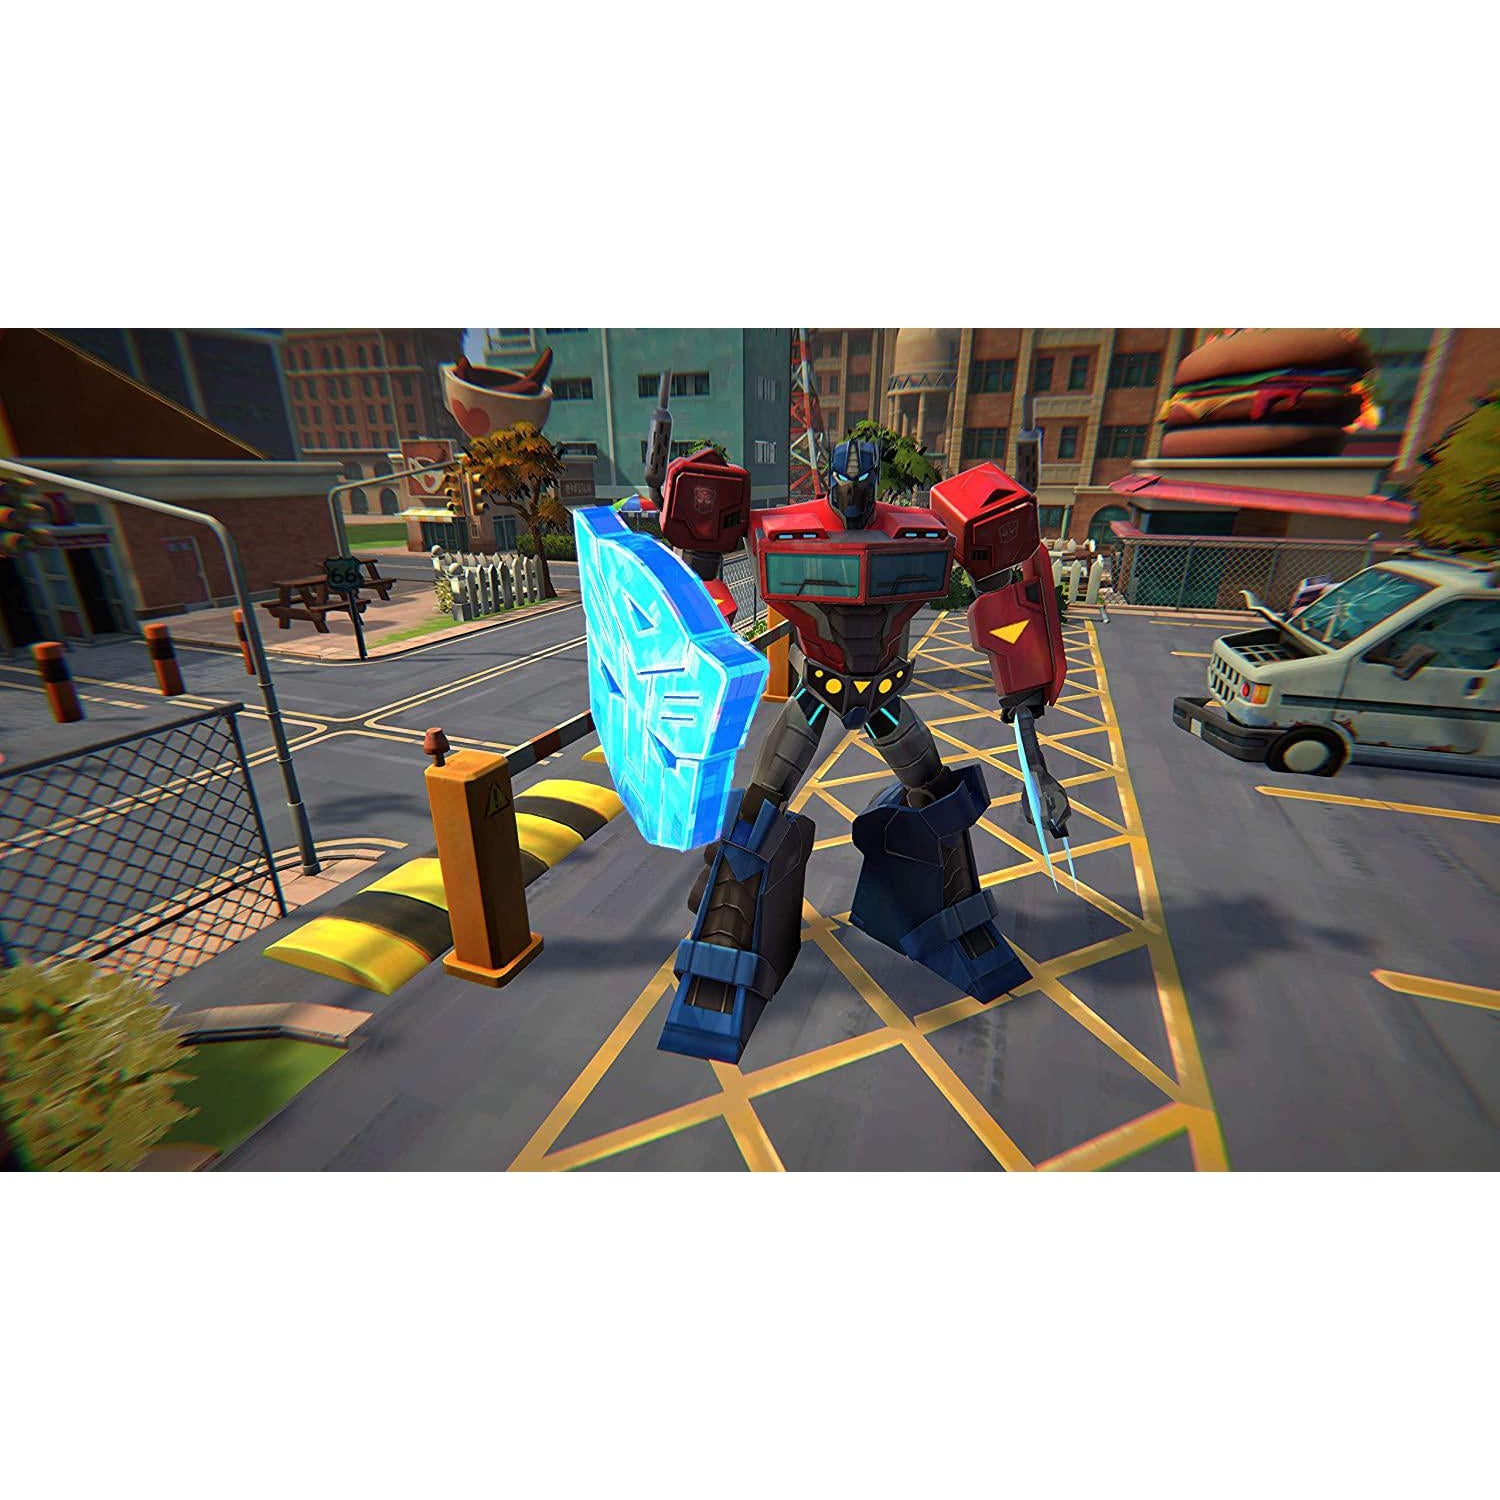 Transformers Battlegrounds (Xbox One)